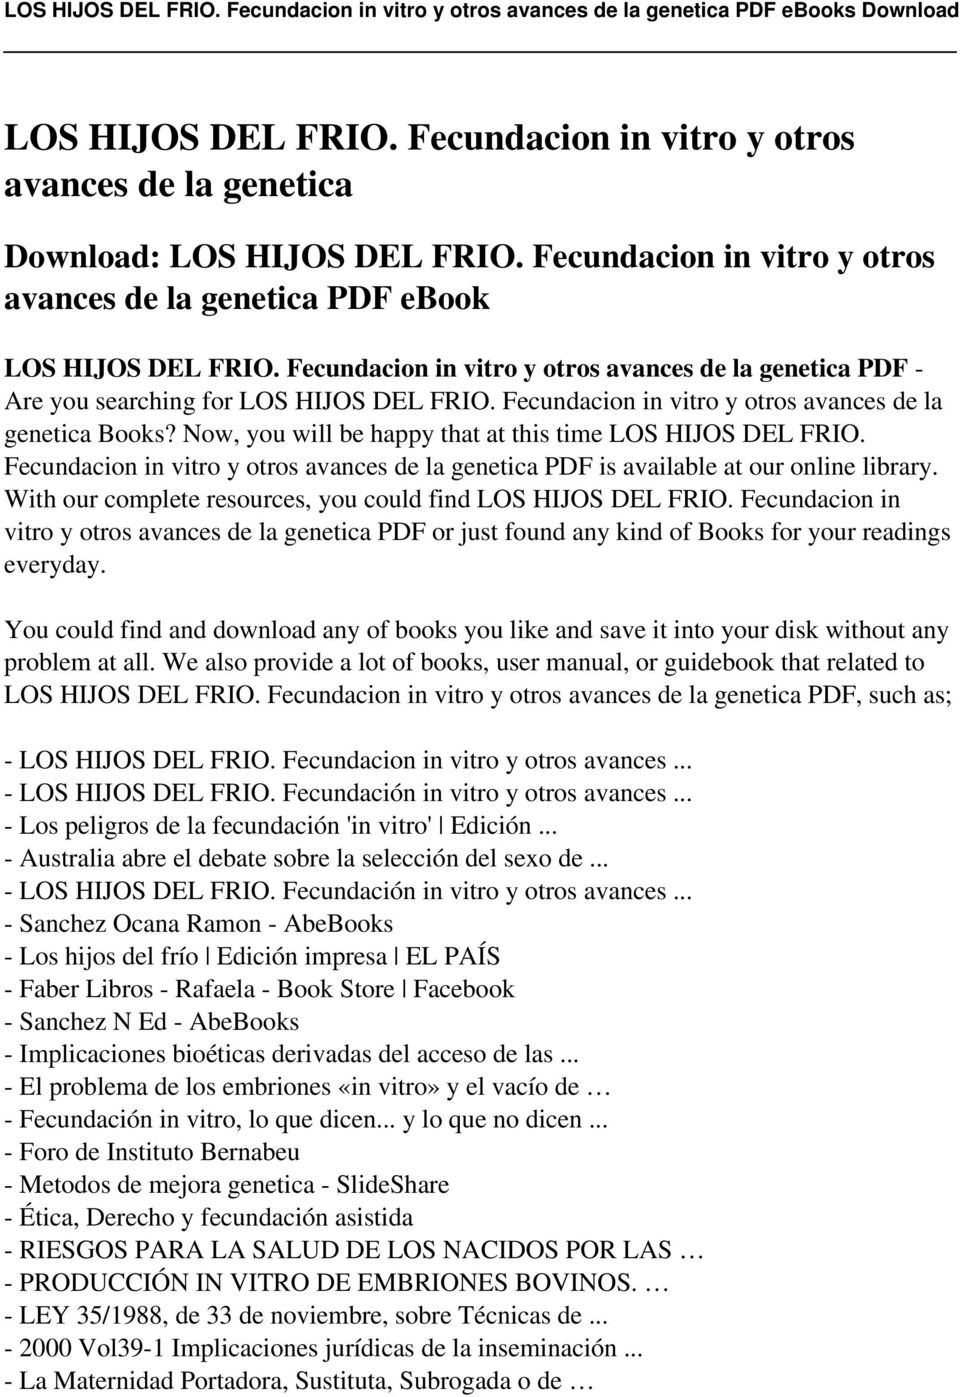 Now, you will be happy that at this time LOS HIJOS DEL FRIO. Fecundacion in vitro y otros avances de la genetica PDF is available at our online library.